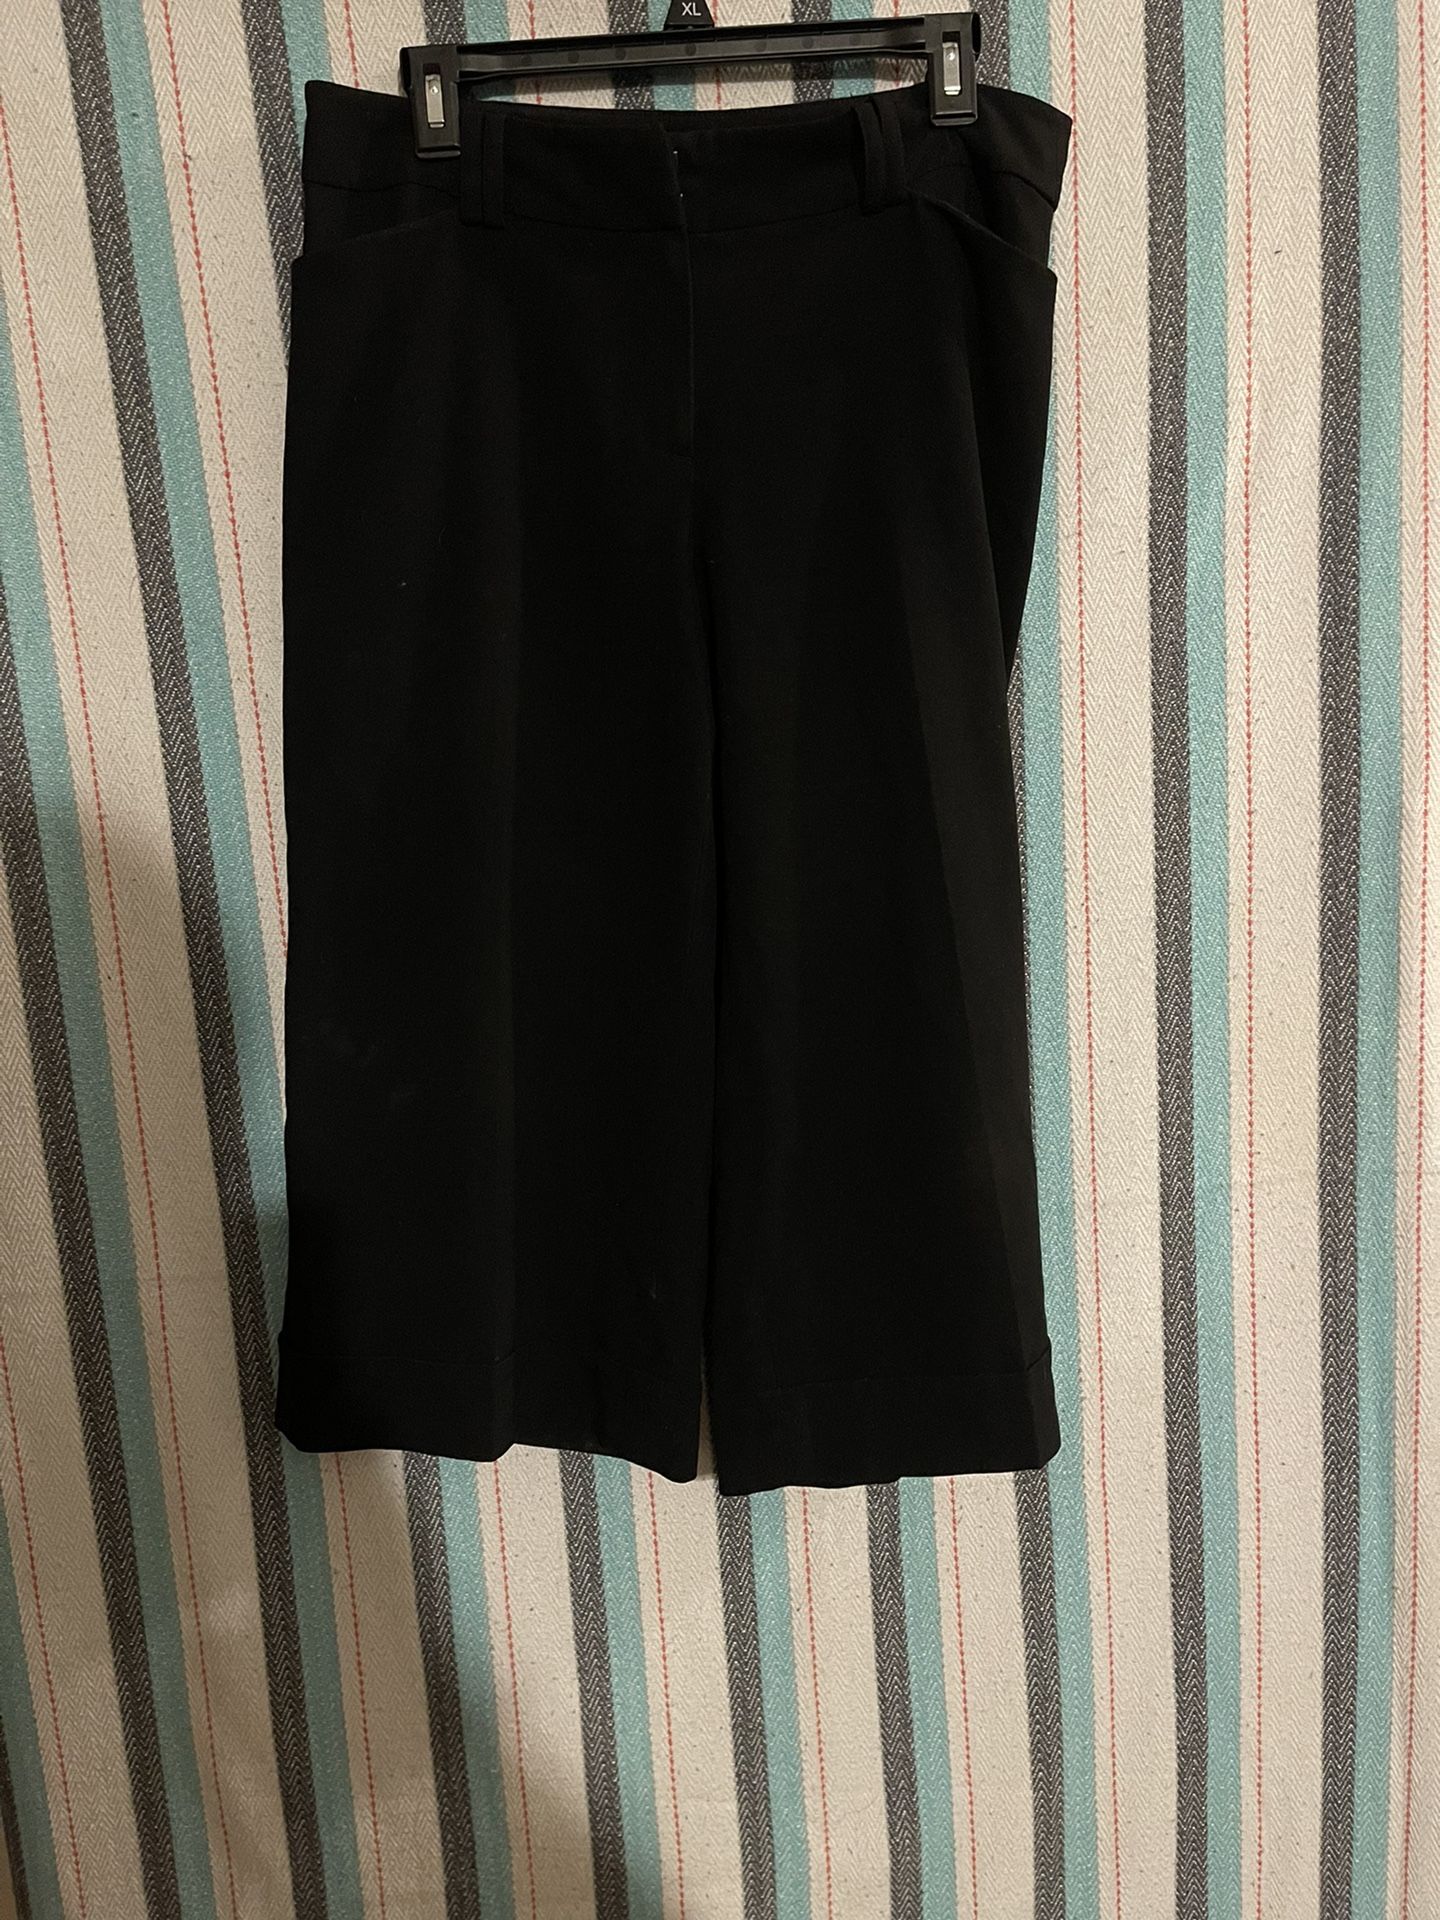 Black Dress Shorts 